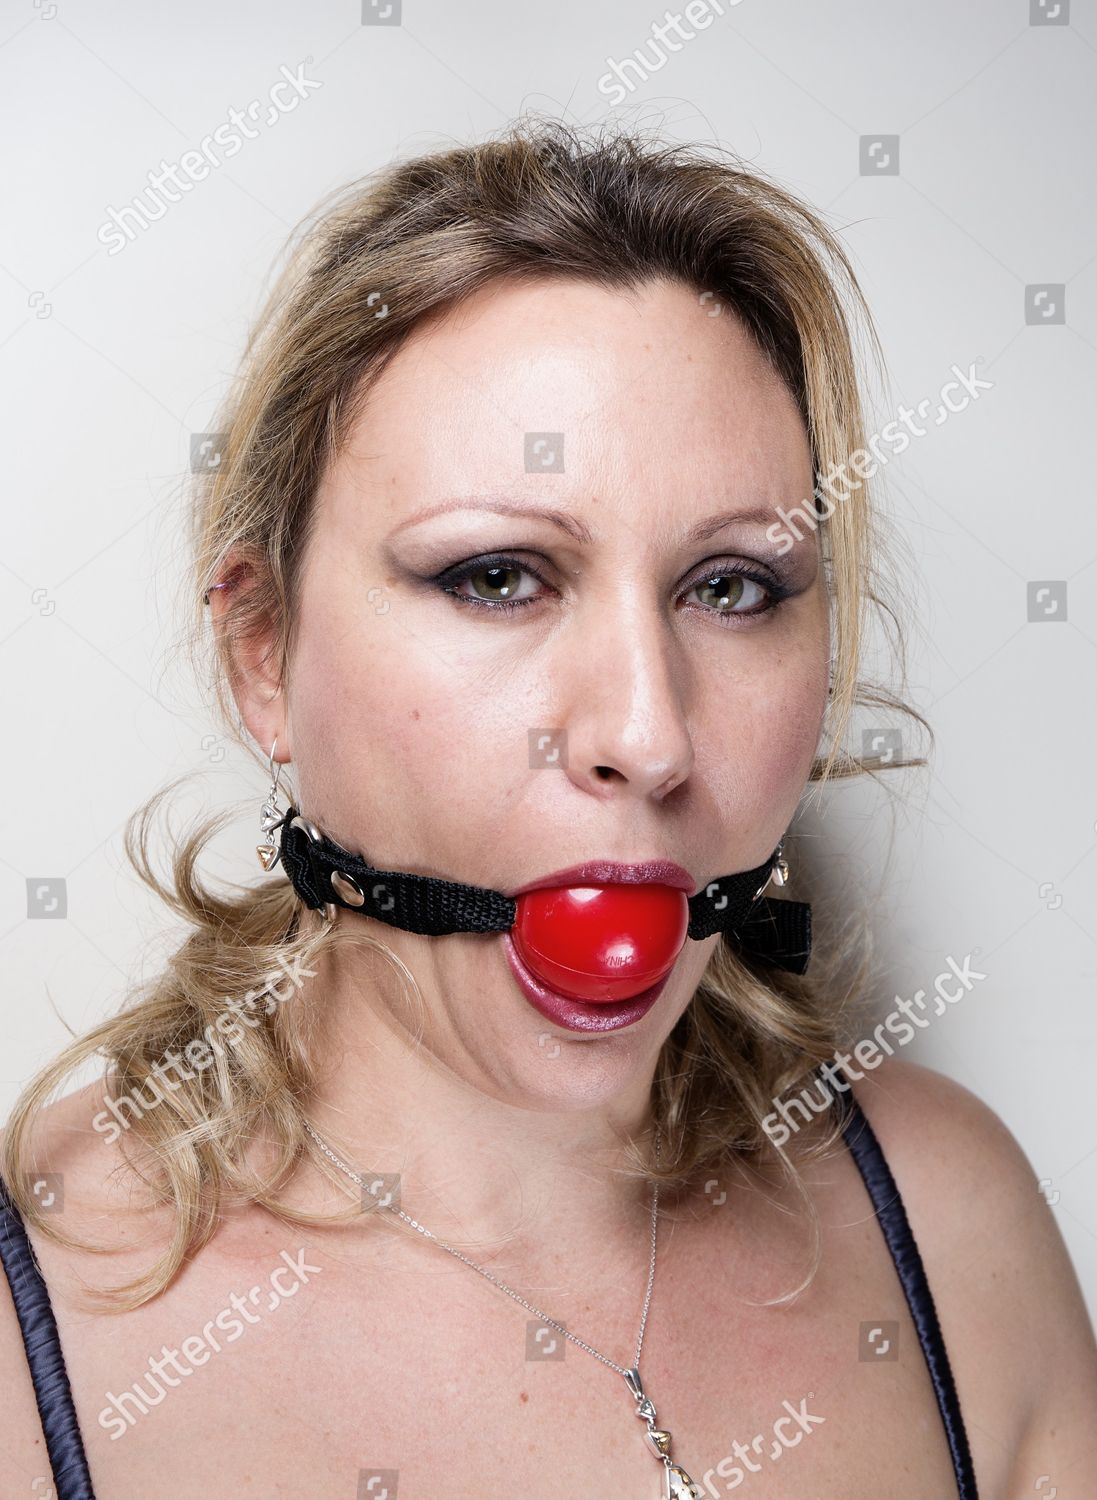 Gag Porn - Charlotte Rose wearing ball gag Foto editorial en stock ...